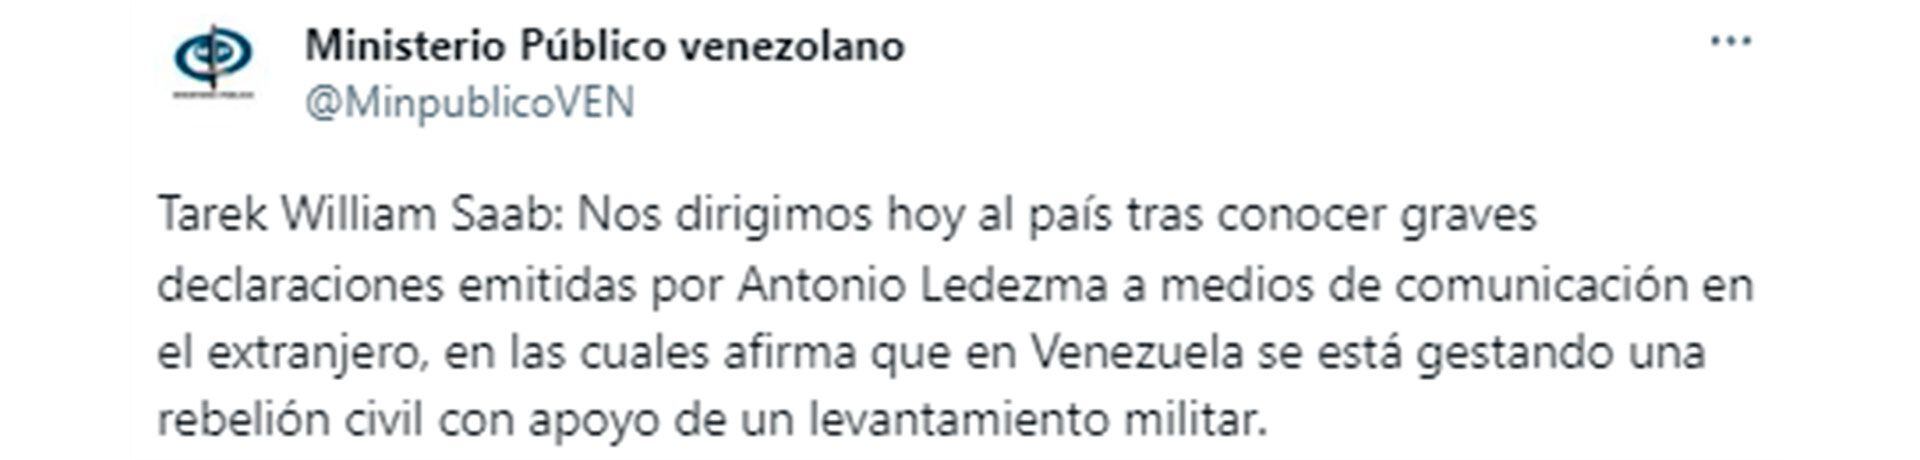 El mensaje del Ministerio Público venezolano